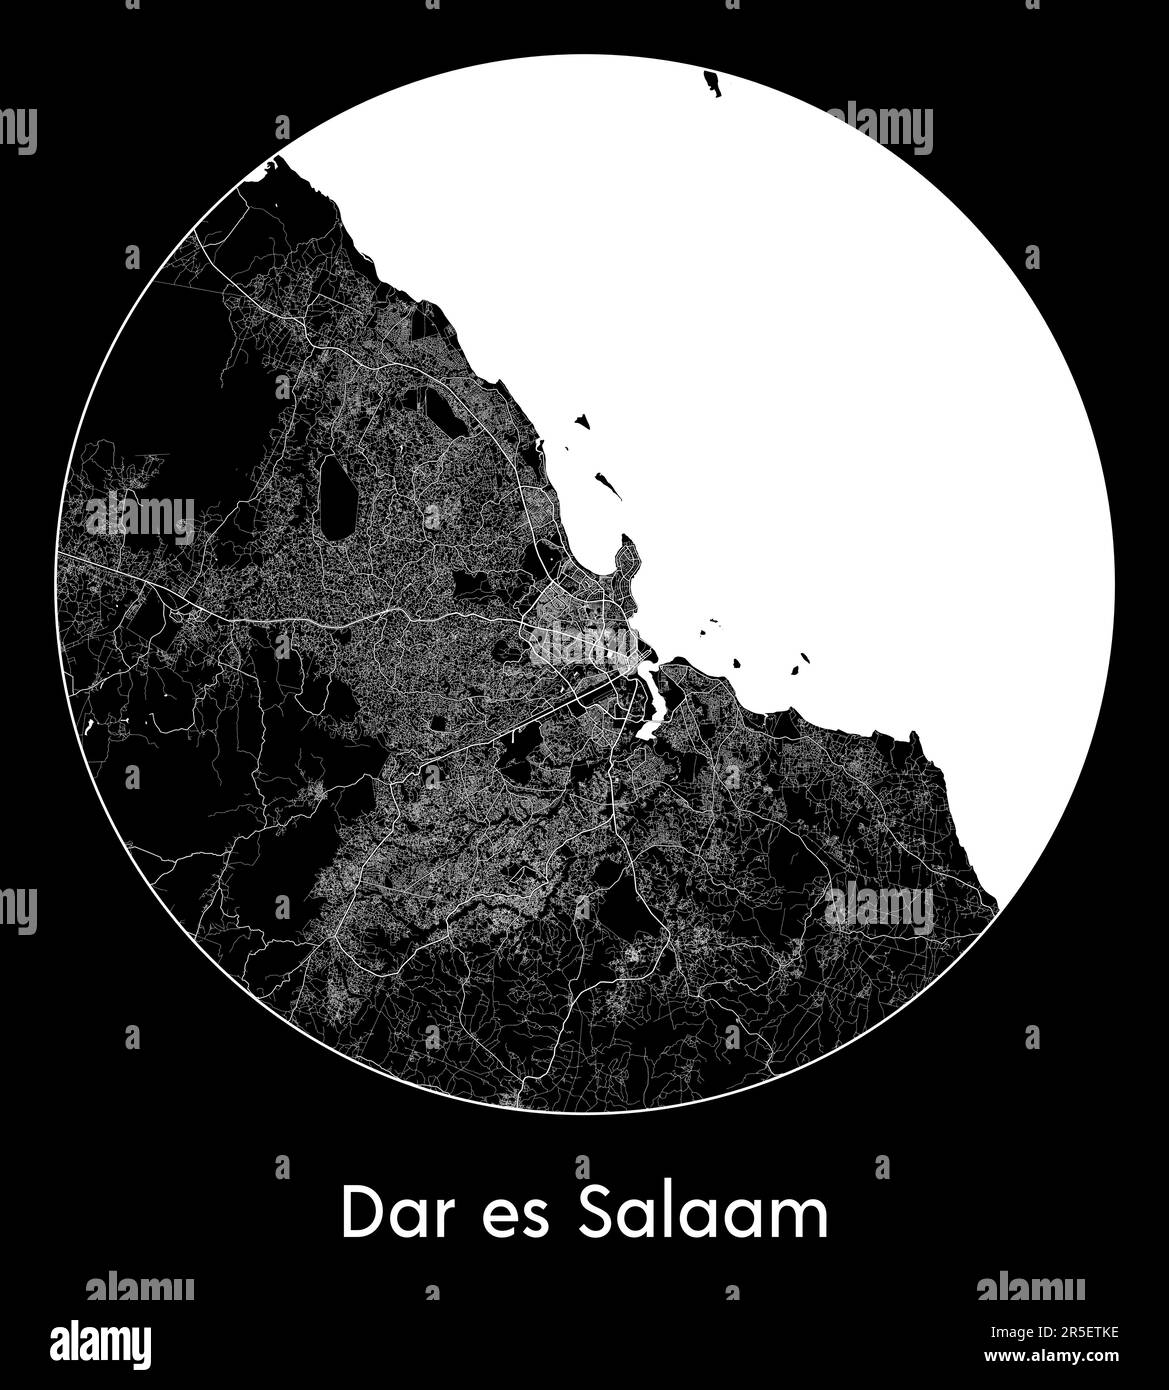 City Map Dar es Salaam Tanzania Africa vector illustration Stock Vector